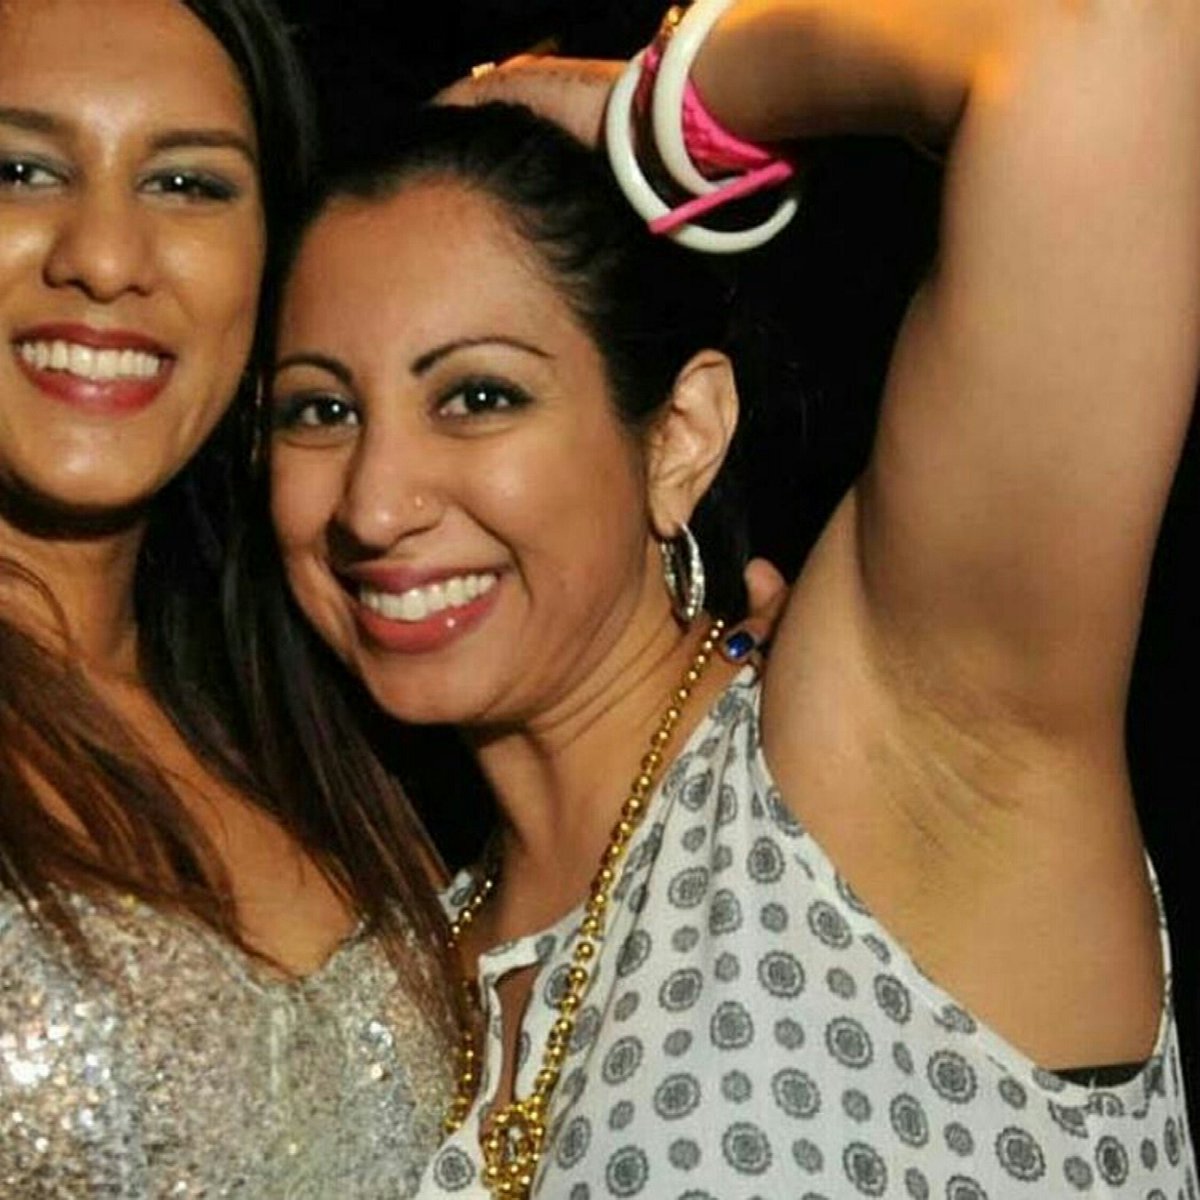 ❤Armpit Addiction❤ on X: Dark #desi #armpit is the best ❤ #desi #milf  #nudegirls #sweatypits #kilikili #armpitfetish #SexyArmpit #hairypits #porn  #sex #hairypits t.coEJWDIXM5O1  X